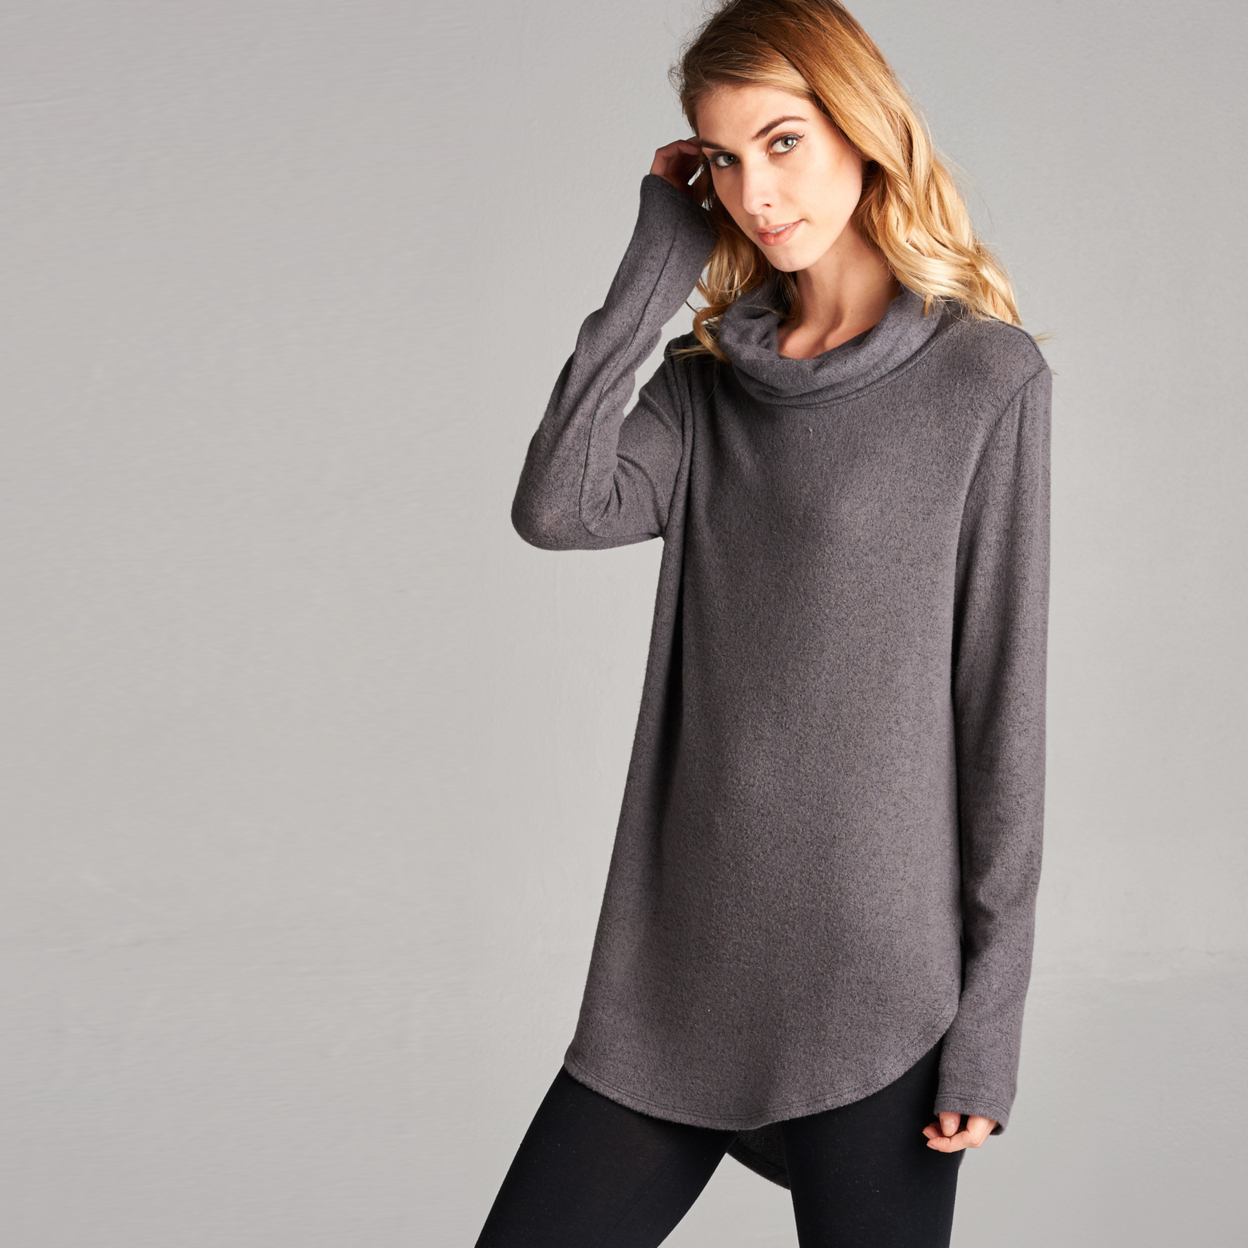 Long Sleeve Brushed Hacci Sweater - Charcoal, Medium (8-10)